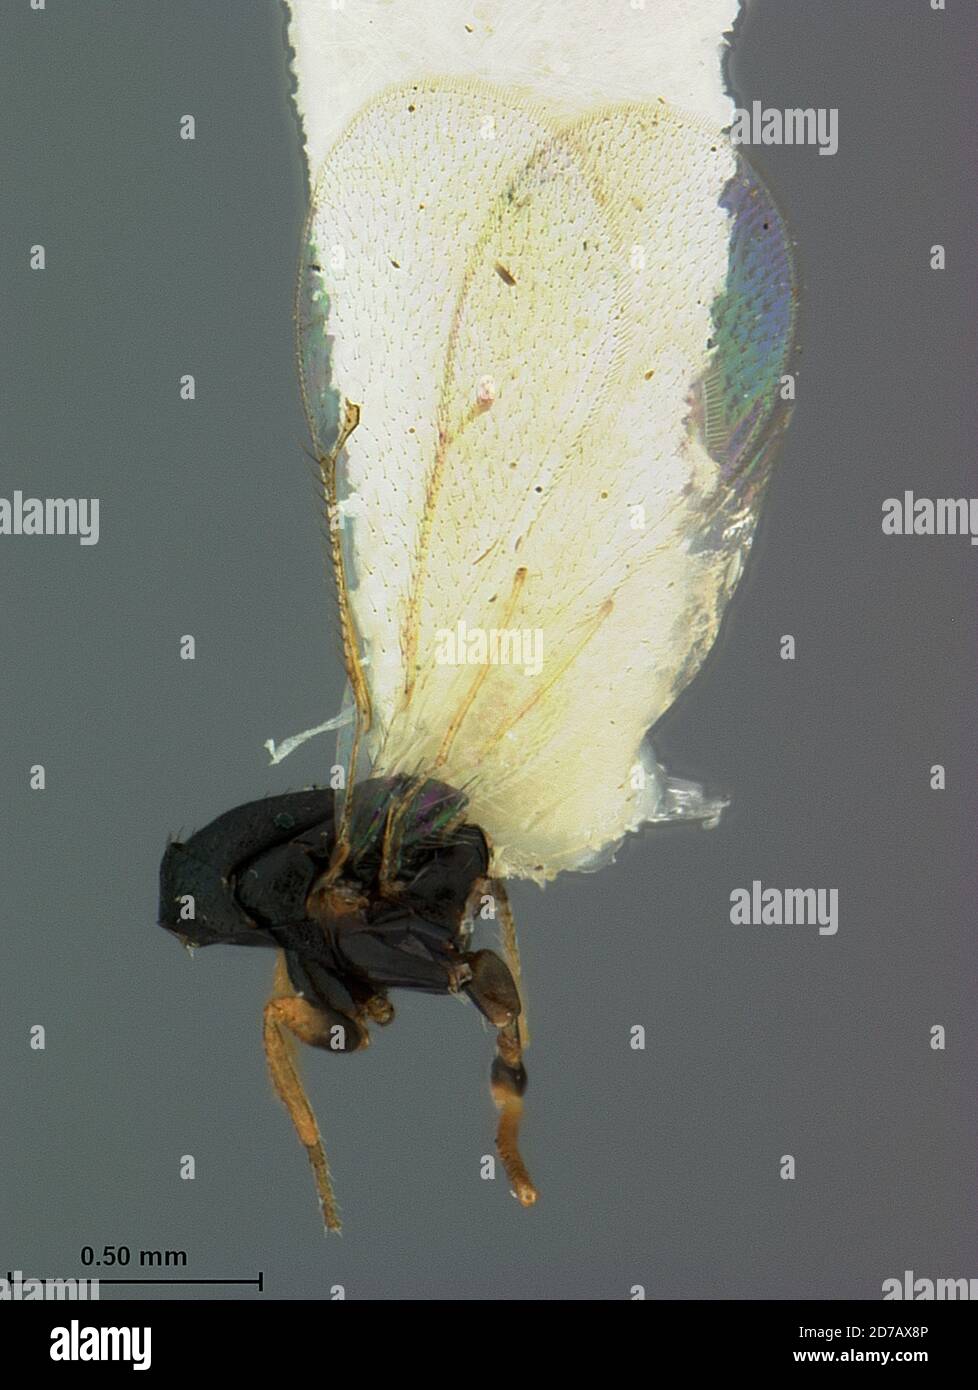 Jacksonville, Duval, Florida, United States, Aprostocetus granulatus Ashmead, 1888, Animalia, Arthropoda, Insecta, Hymenoptera, Eulophidae Stock Photo